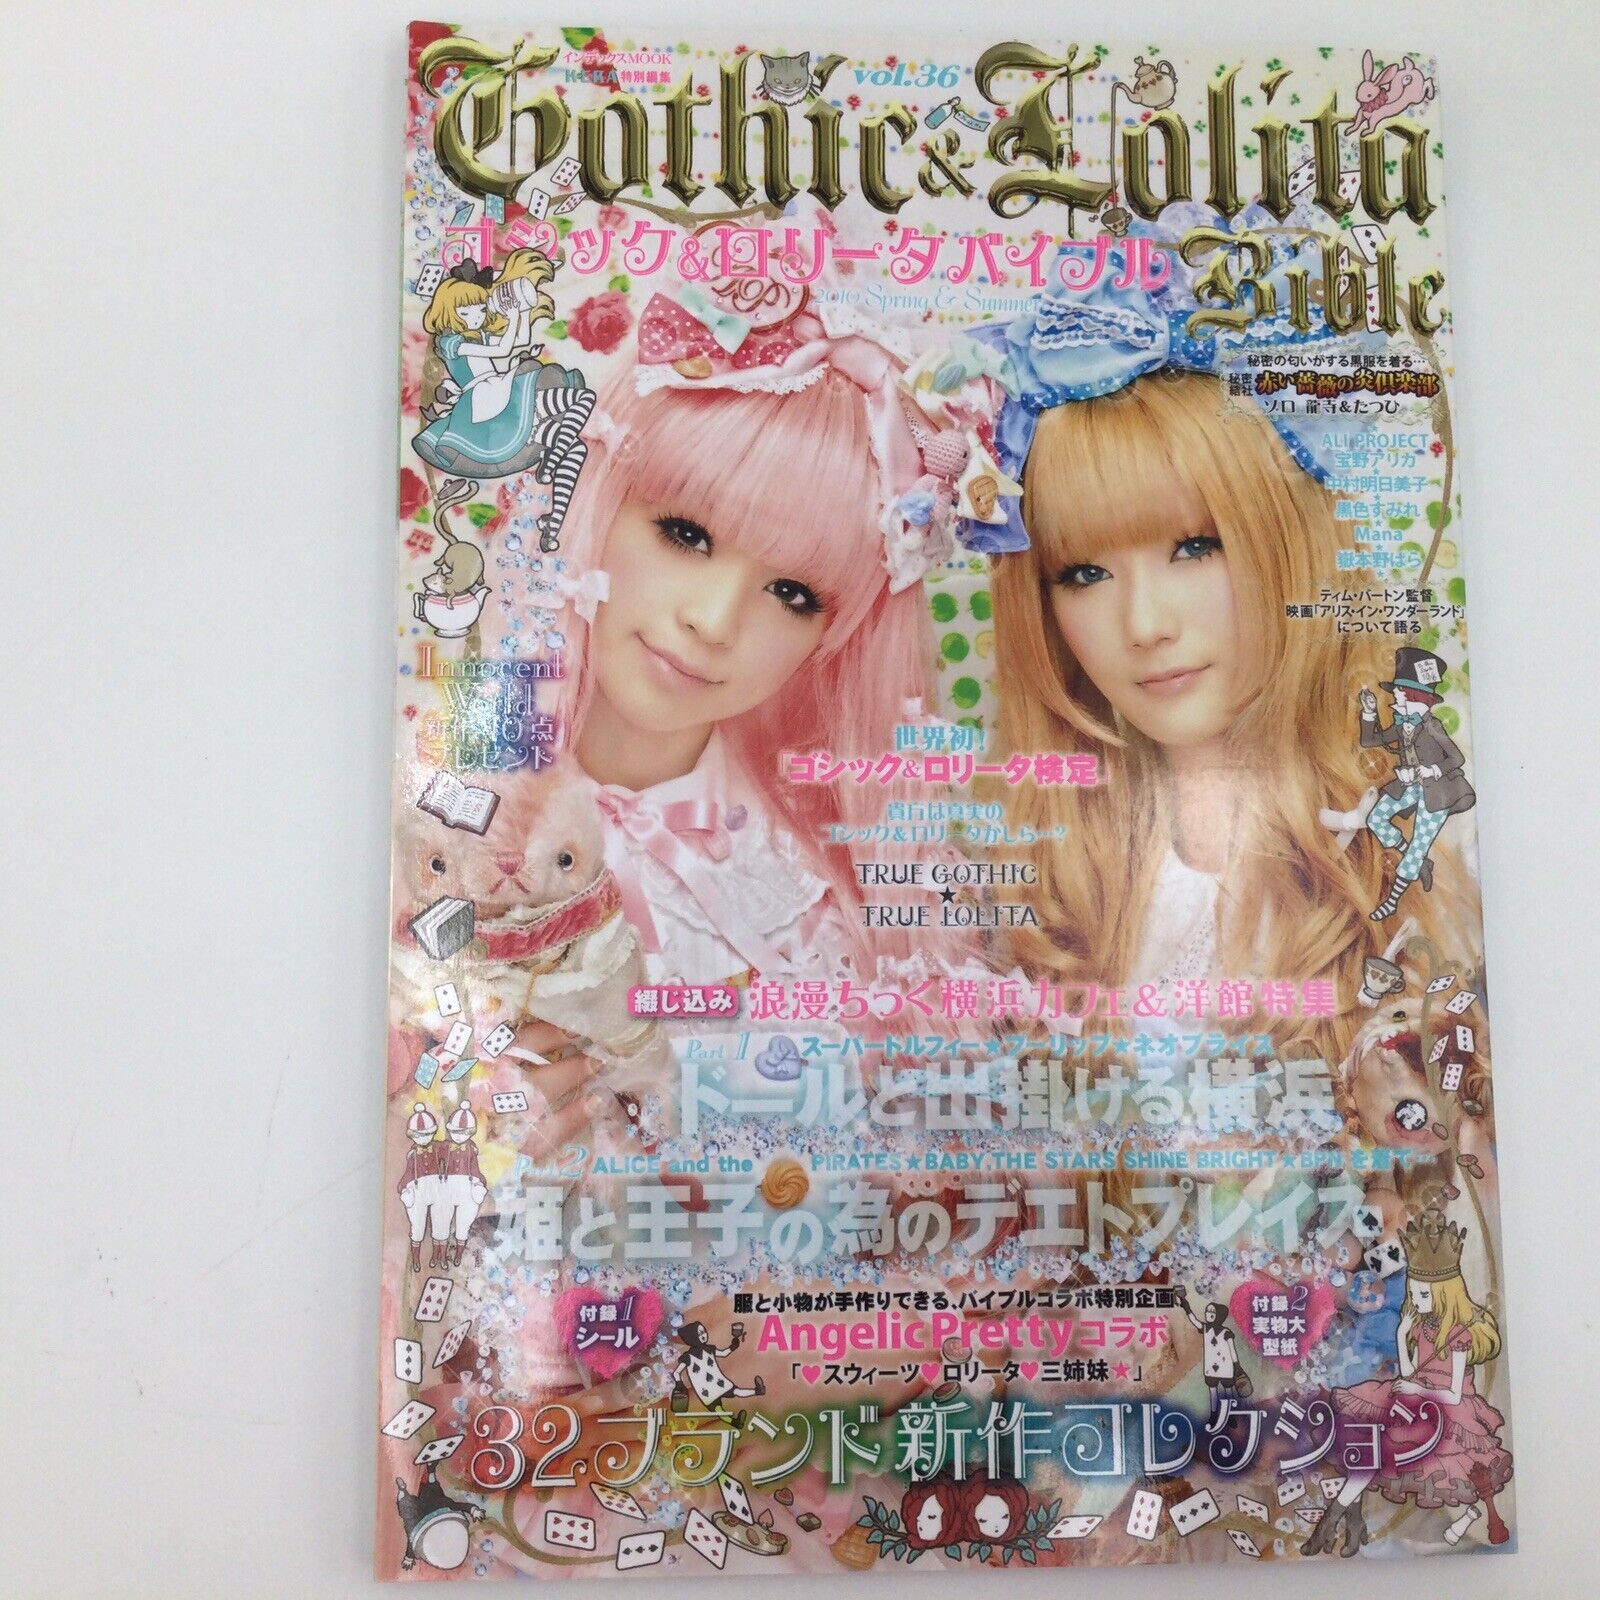 Gothic & Lolita Bible Vol.36 Book w/ Handmade Accessories Pattern Japan 2010